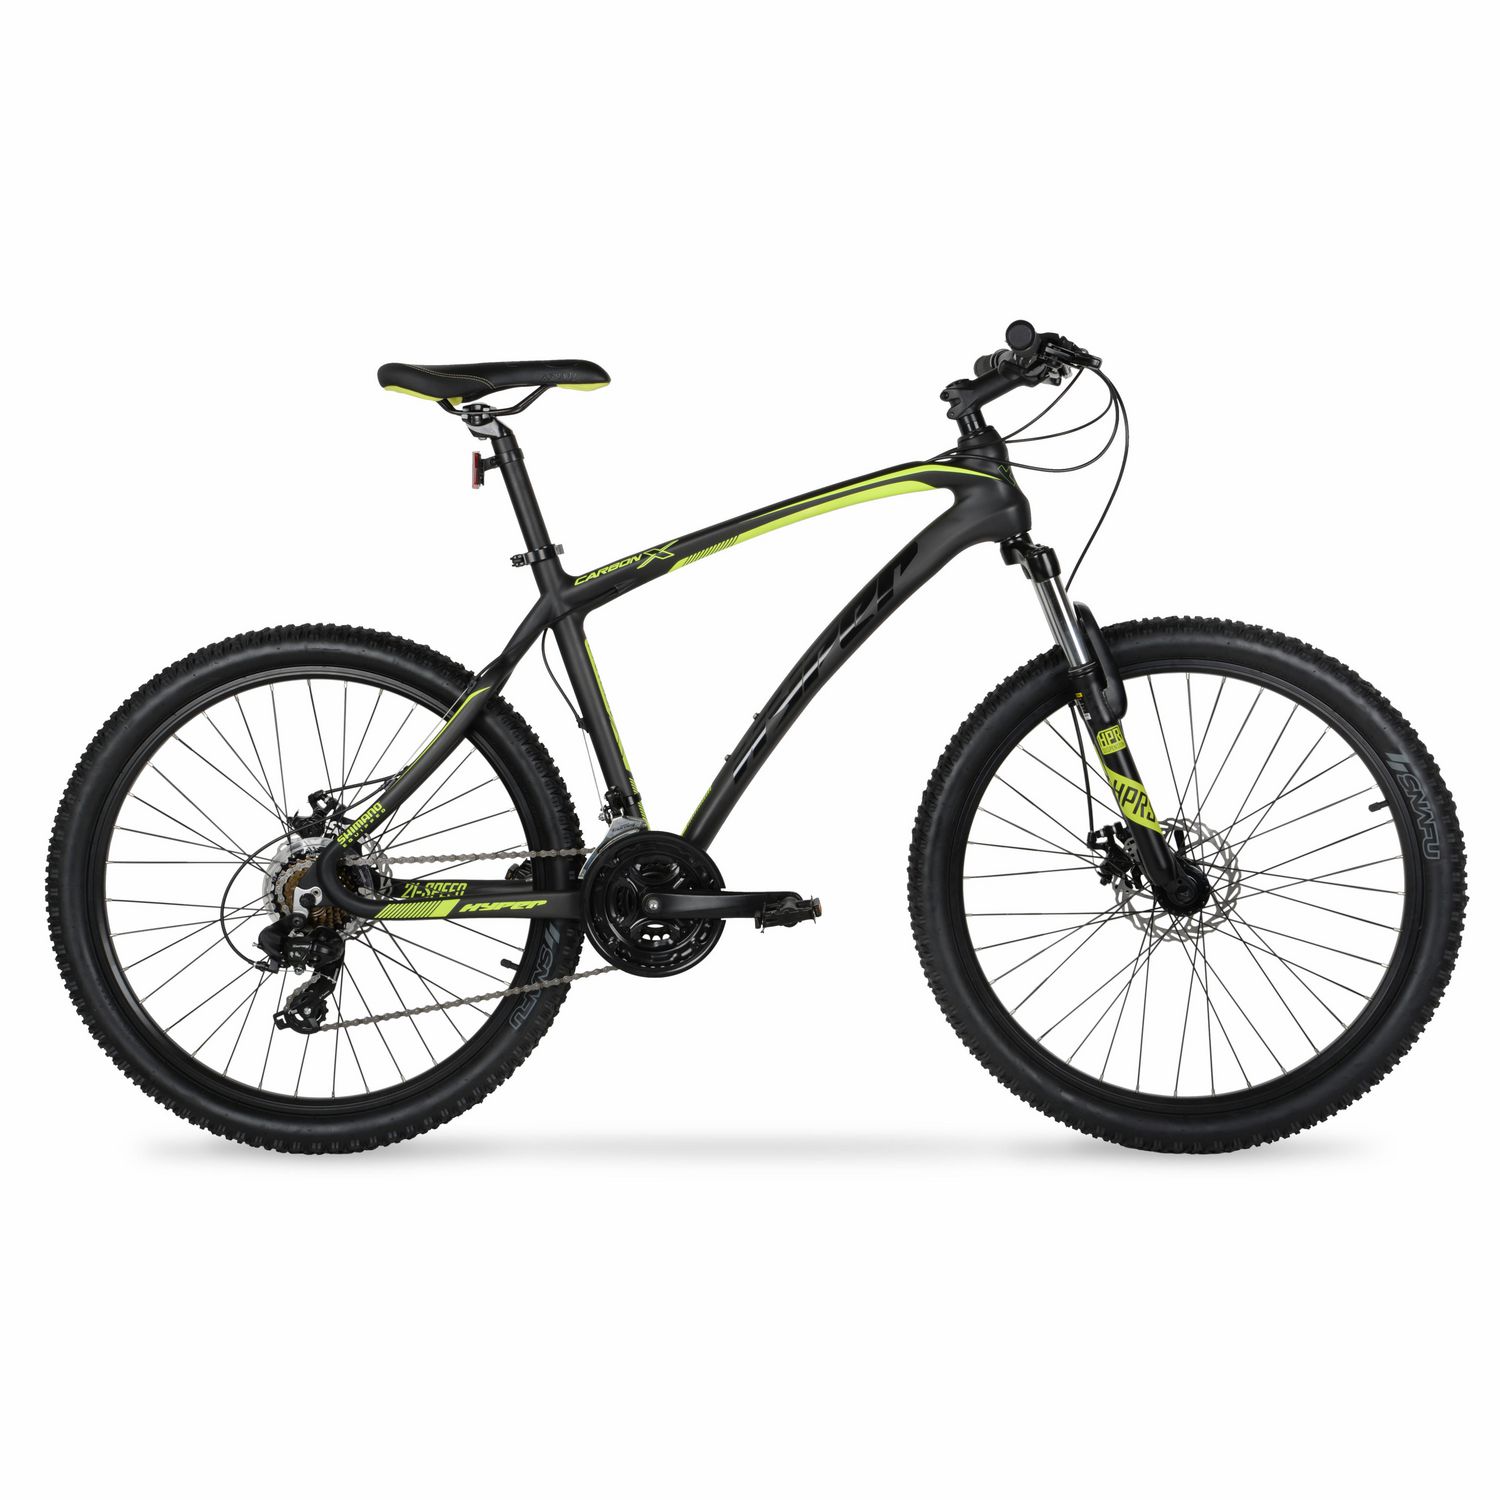 Hyper 26" Carbon Fiber Men's Mountain Bike, Black/Green Walmart Canada